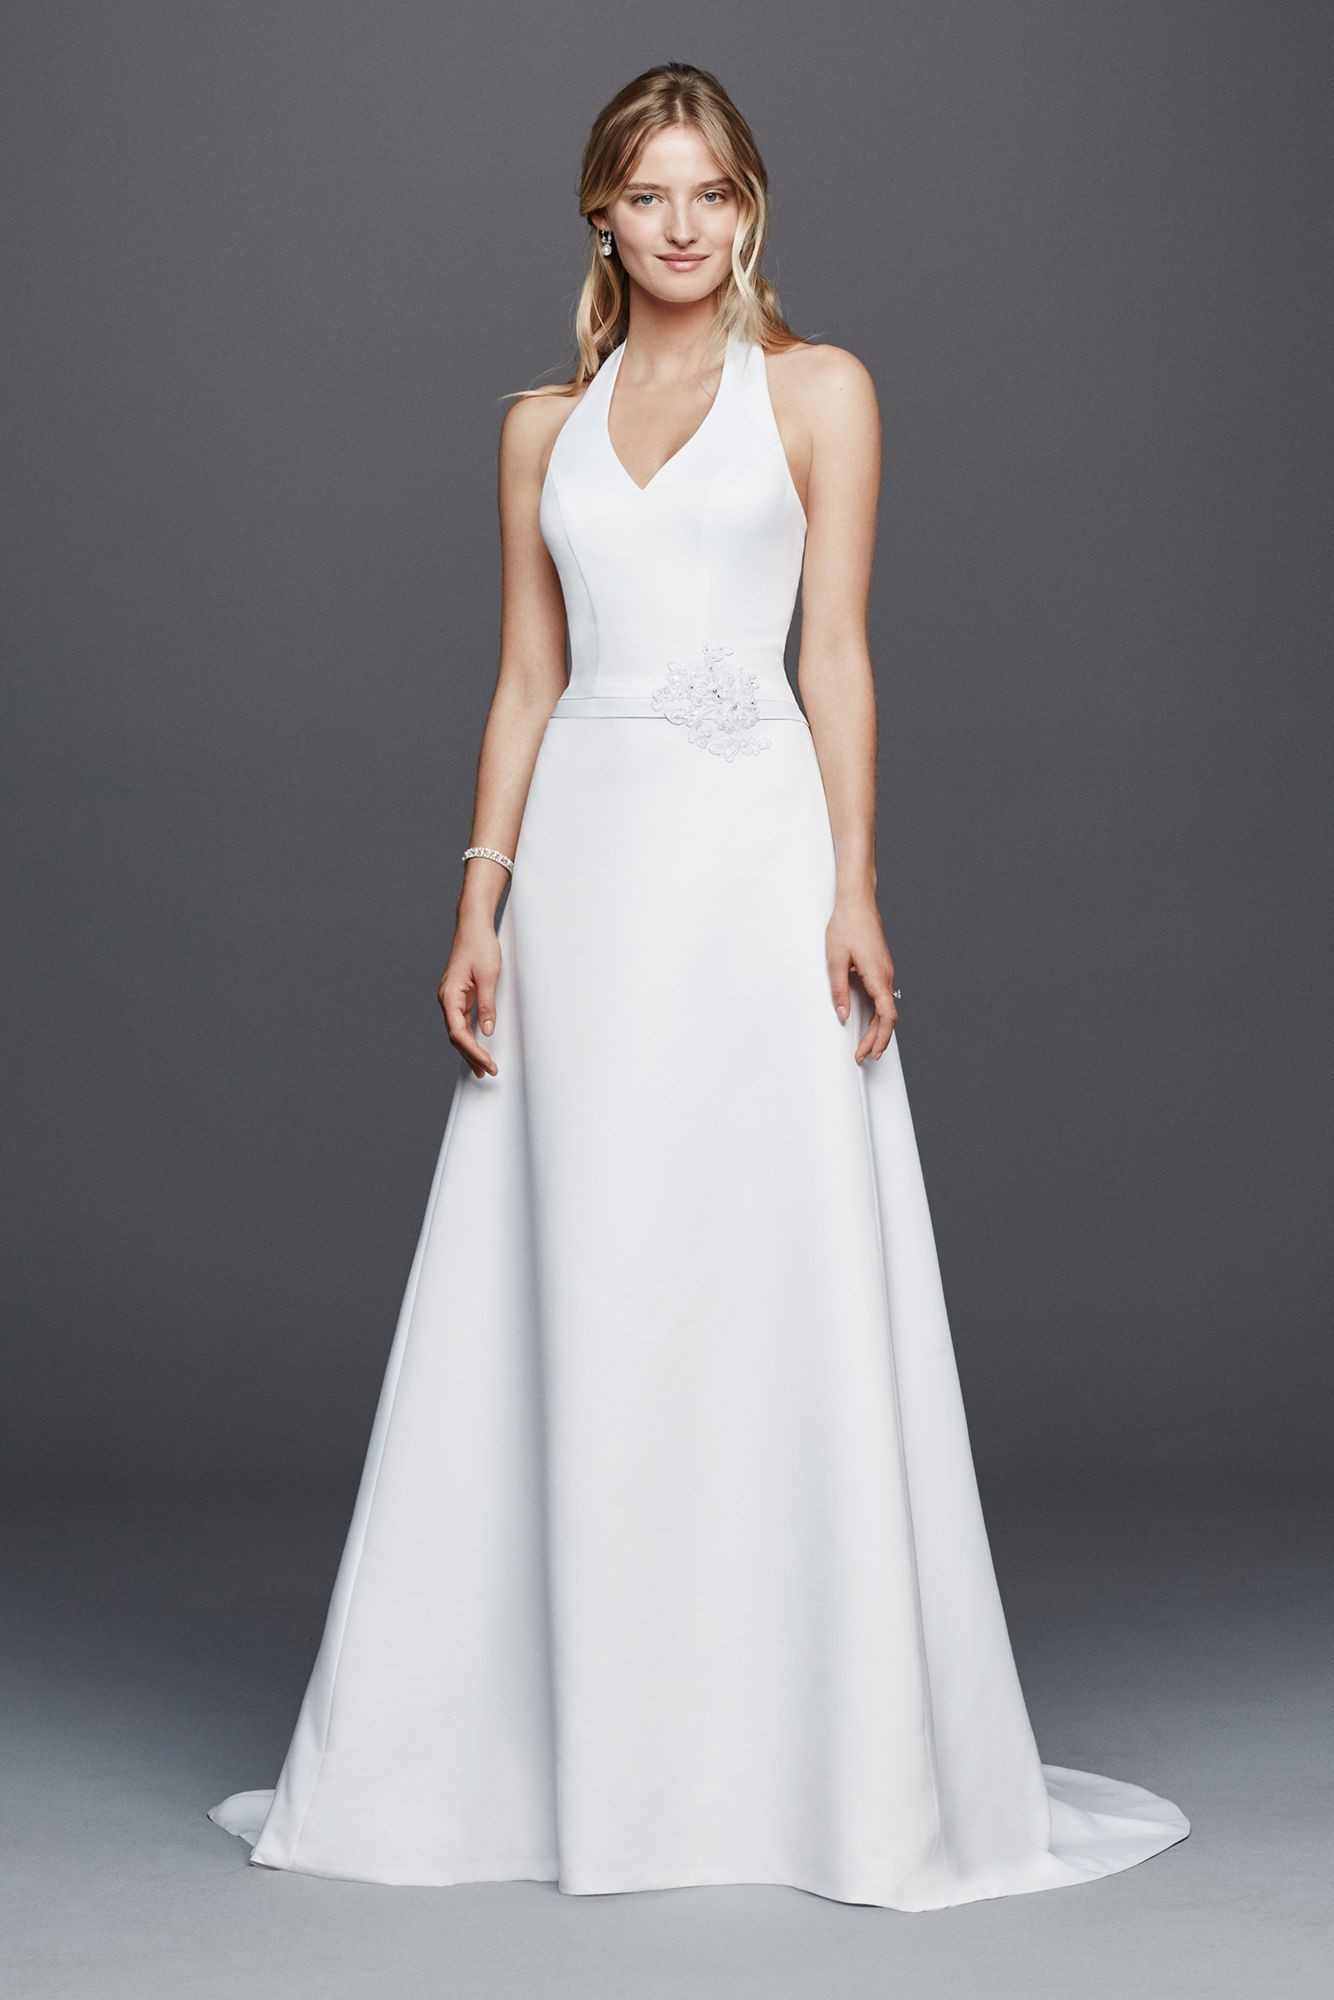 Halter Top Wedding Dresses
 Halter V neck Wedding Dress with Flower Detail Style